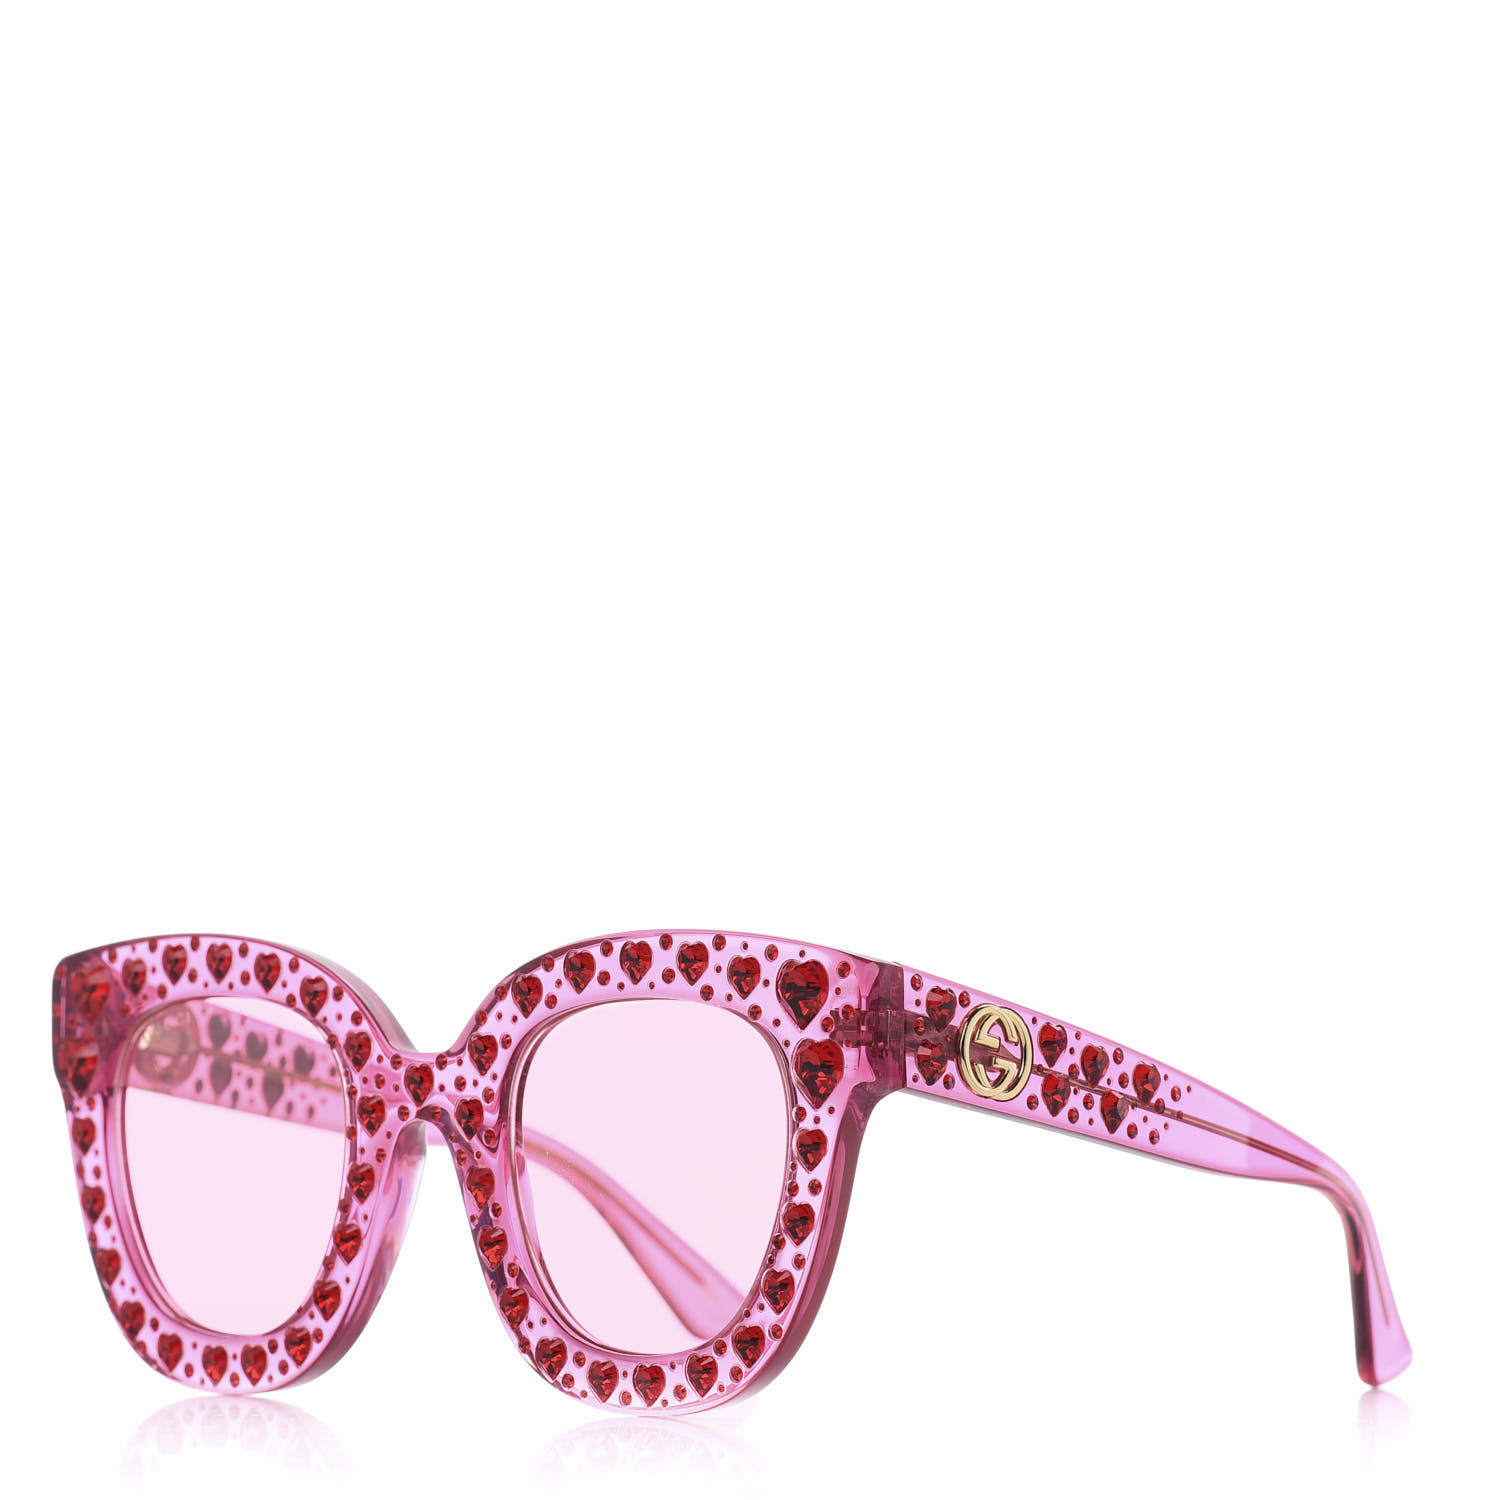 gucci sunglasses pink crystals